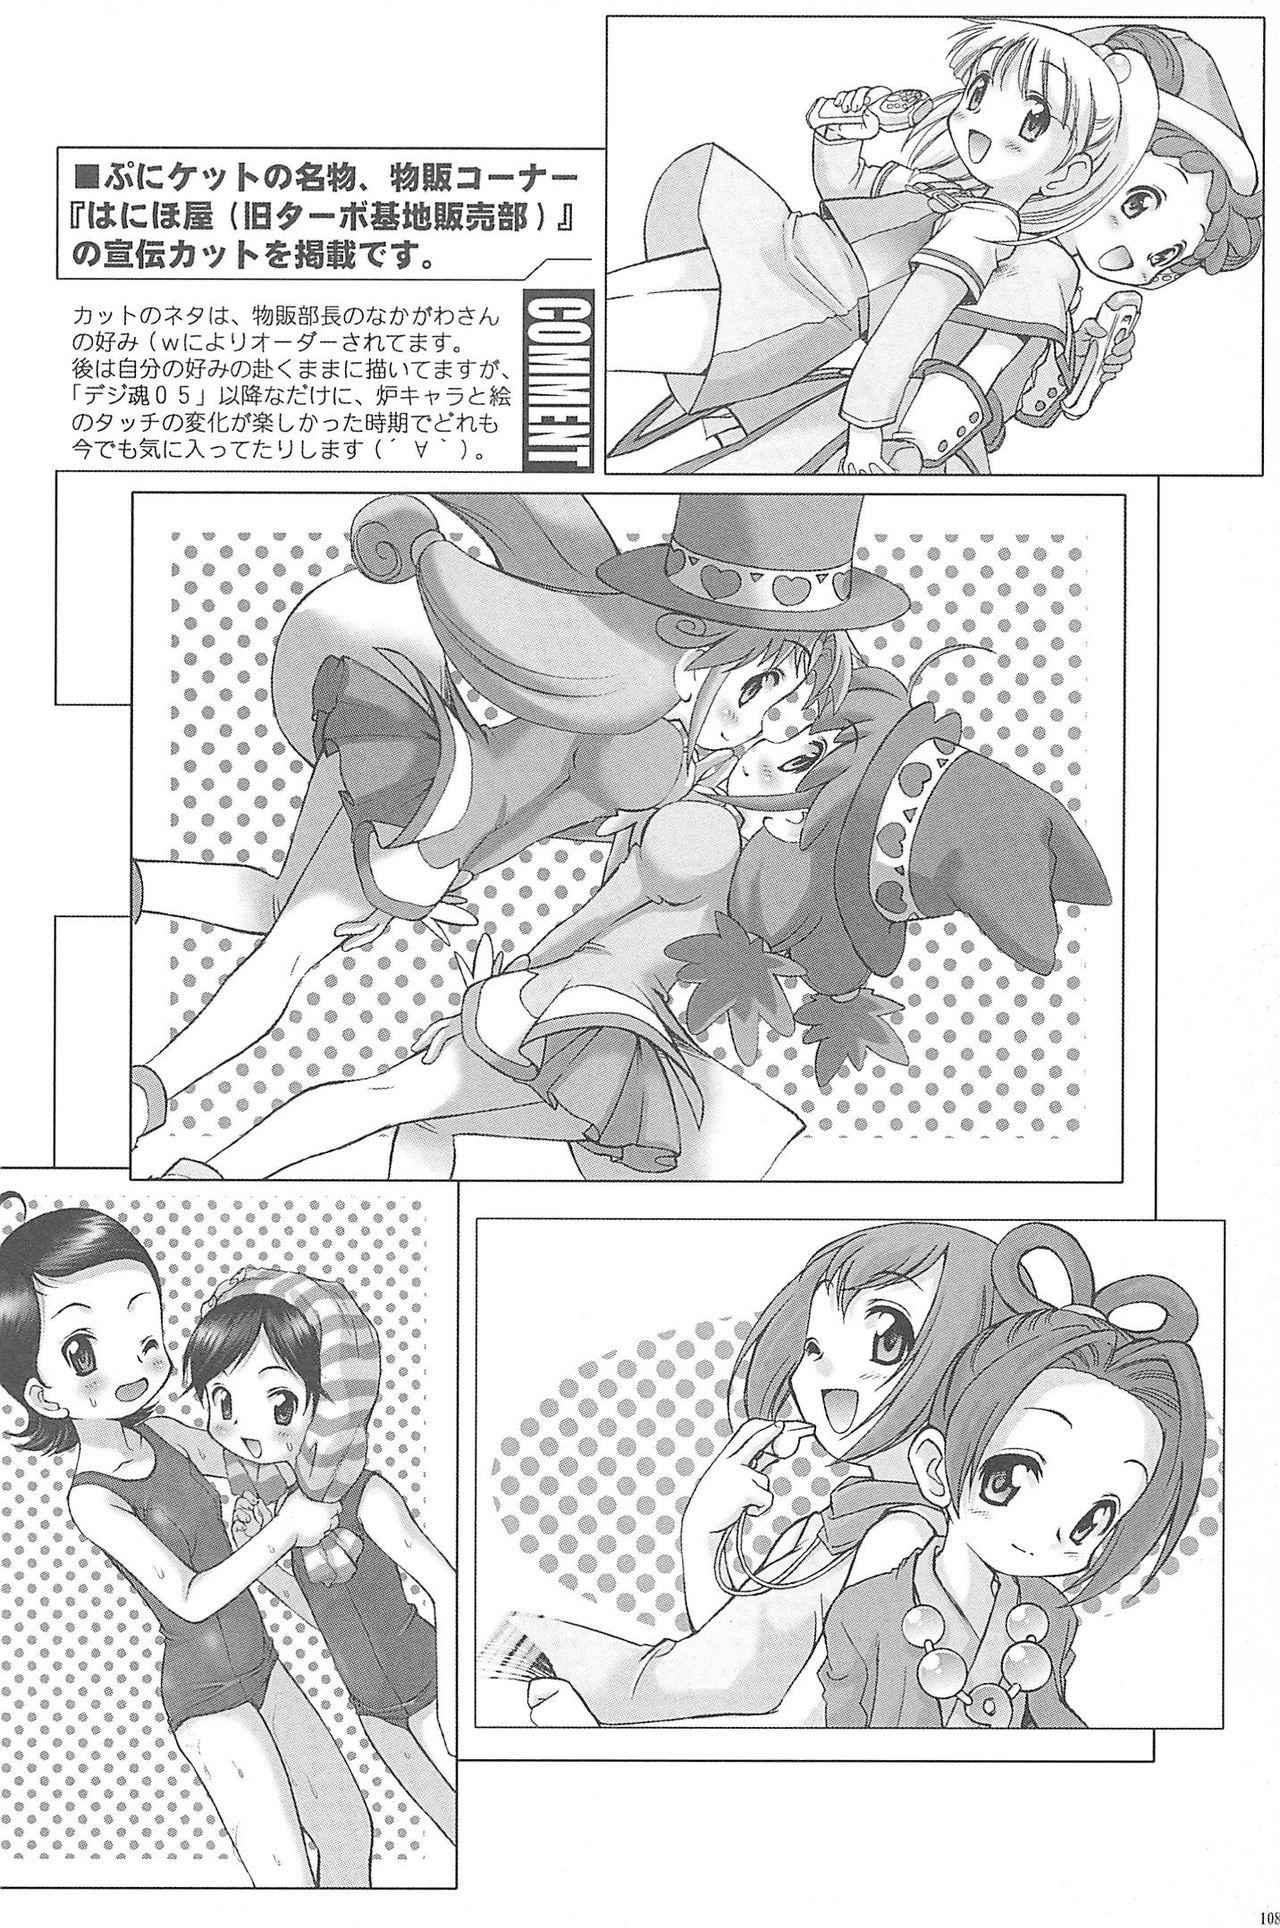 Ariake International X-rated Manga Festival Mercy Rabbit SPECIAL 110